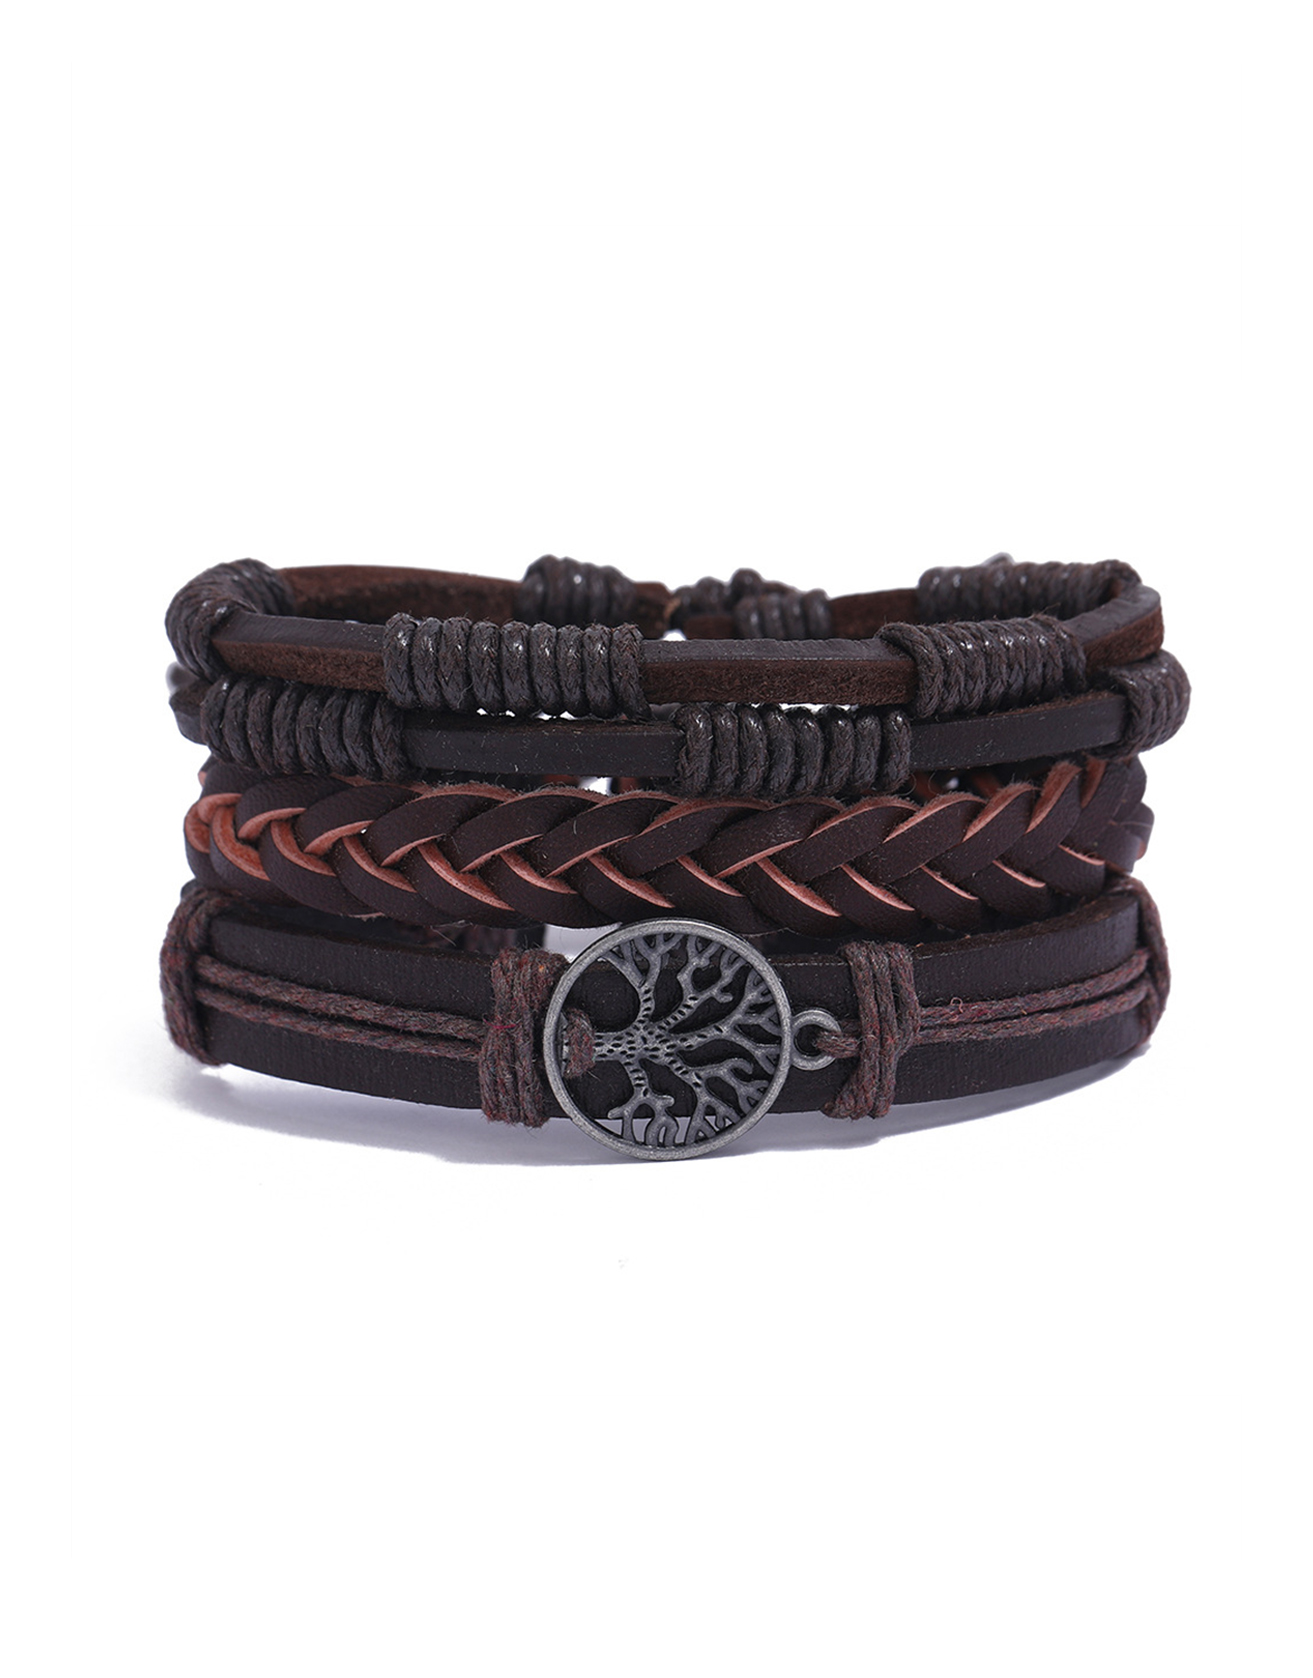 ADRAMATA Viking Bracelets Set Beads Braided Leather / TECHWEAR CLUB / Techwear